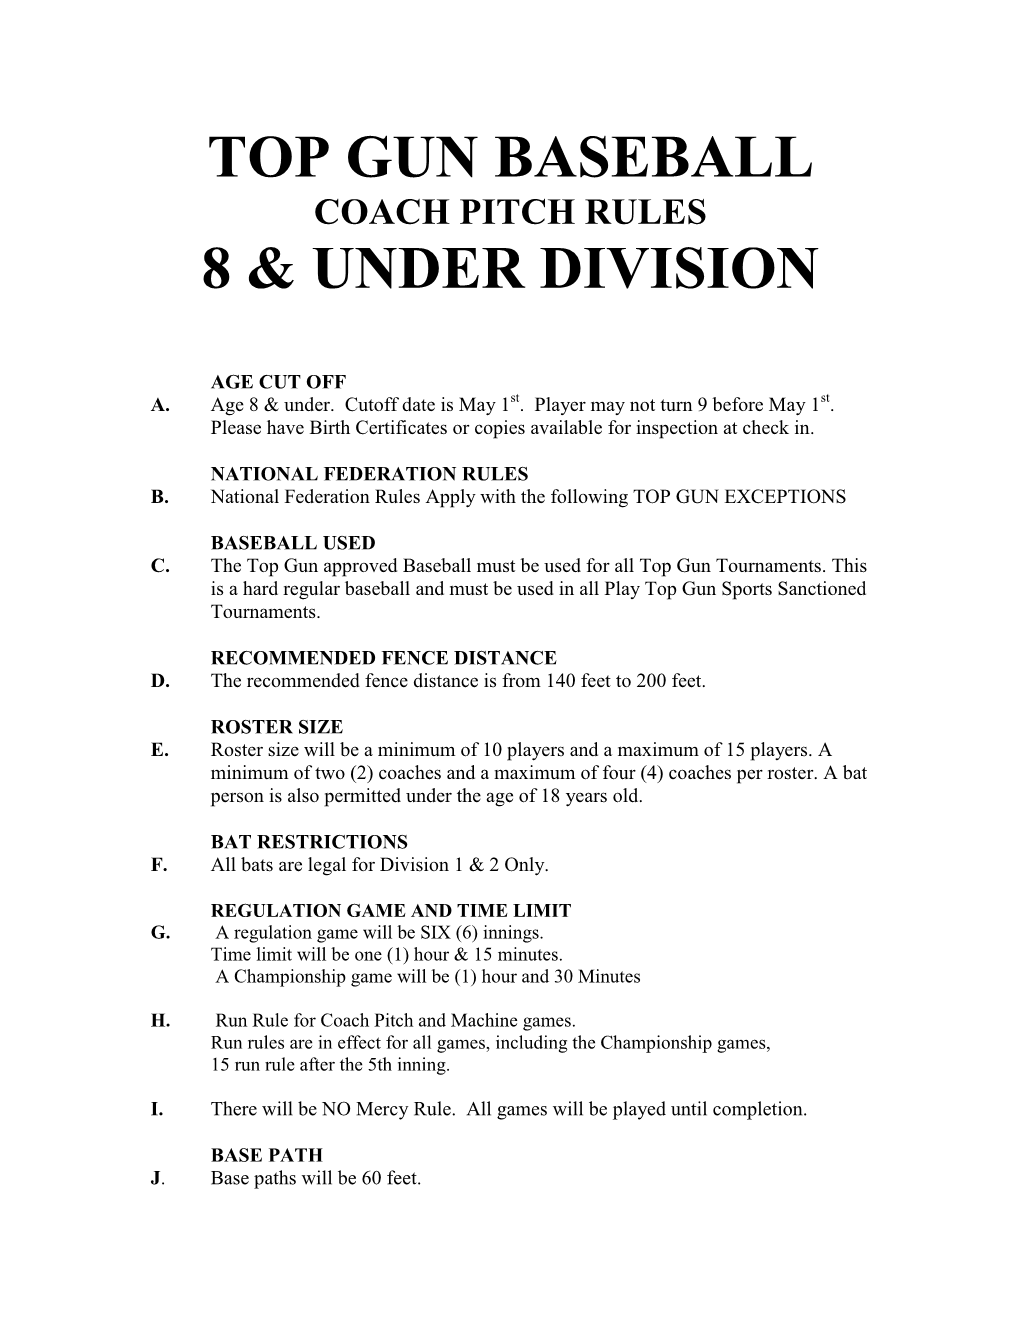 Top Gun Baseball Coach Pitch Rules 8 & Under Division